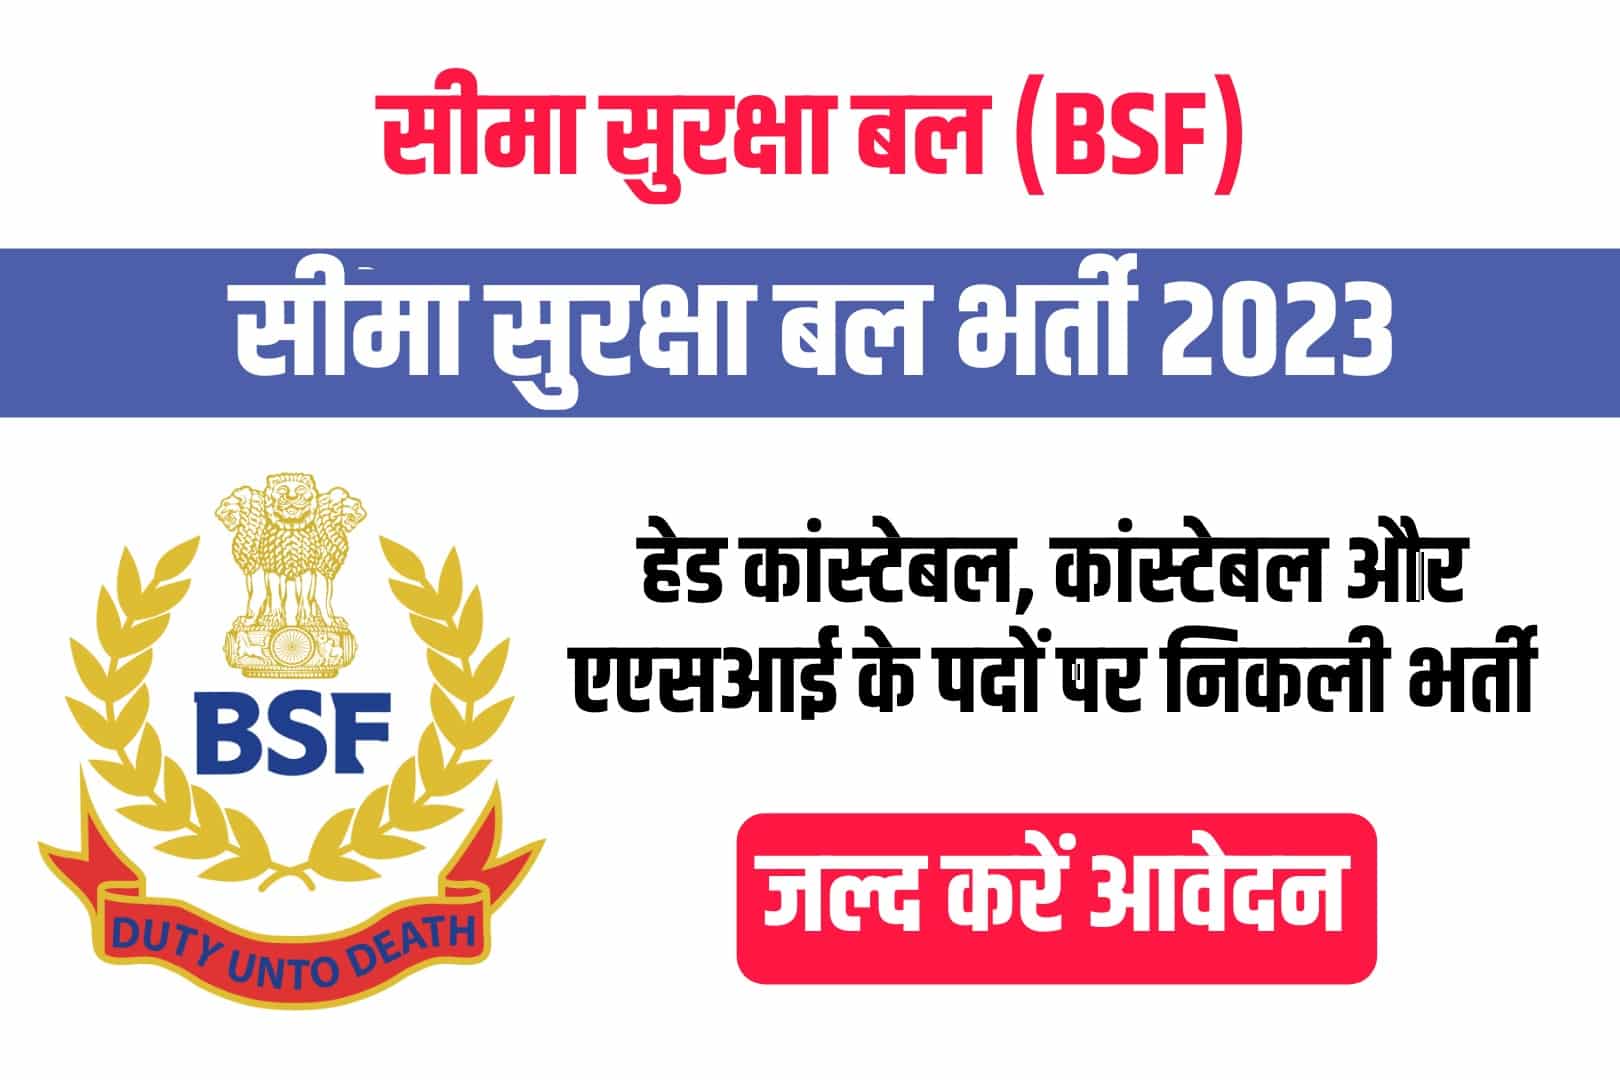 BSF HC ASI Constable Group C Recruitment 2023 Online Form | सीमा सुरक्षा बल हेड कांस्टेबल, कांस्टेबल और एएसआई भर्ती 2023